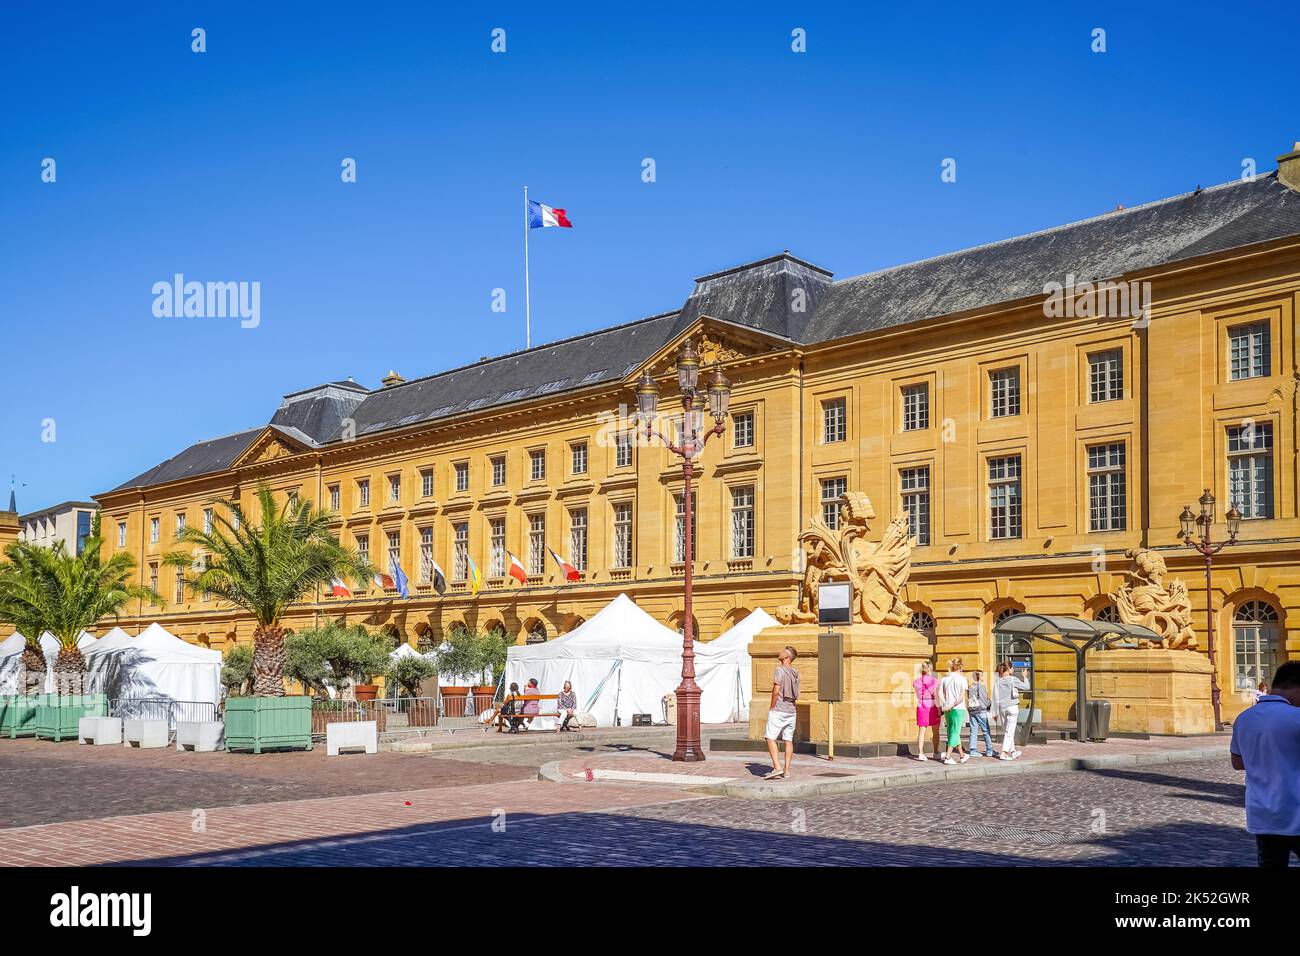 Cathedral Square, Metz, Frankreich Stockfoto